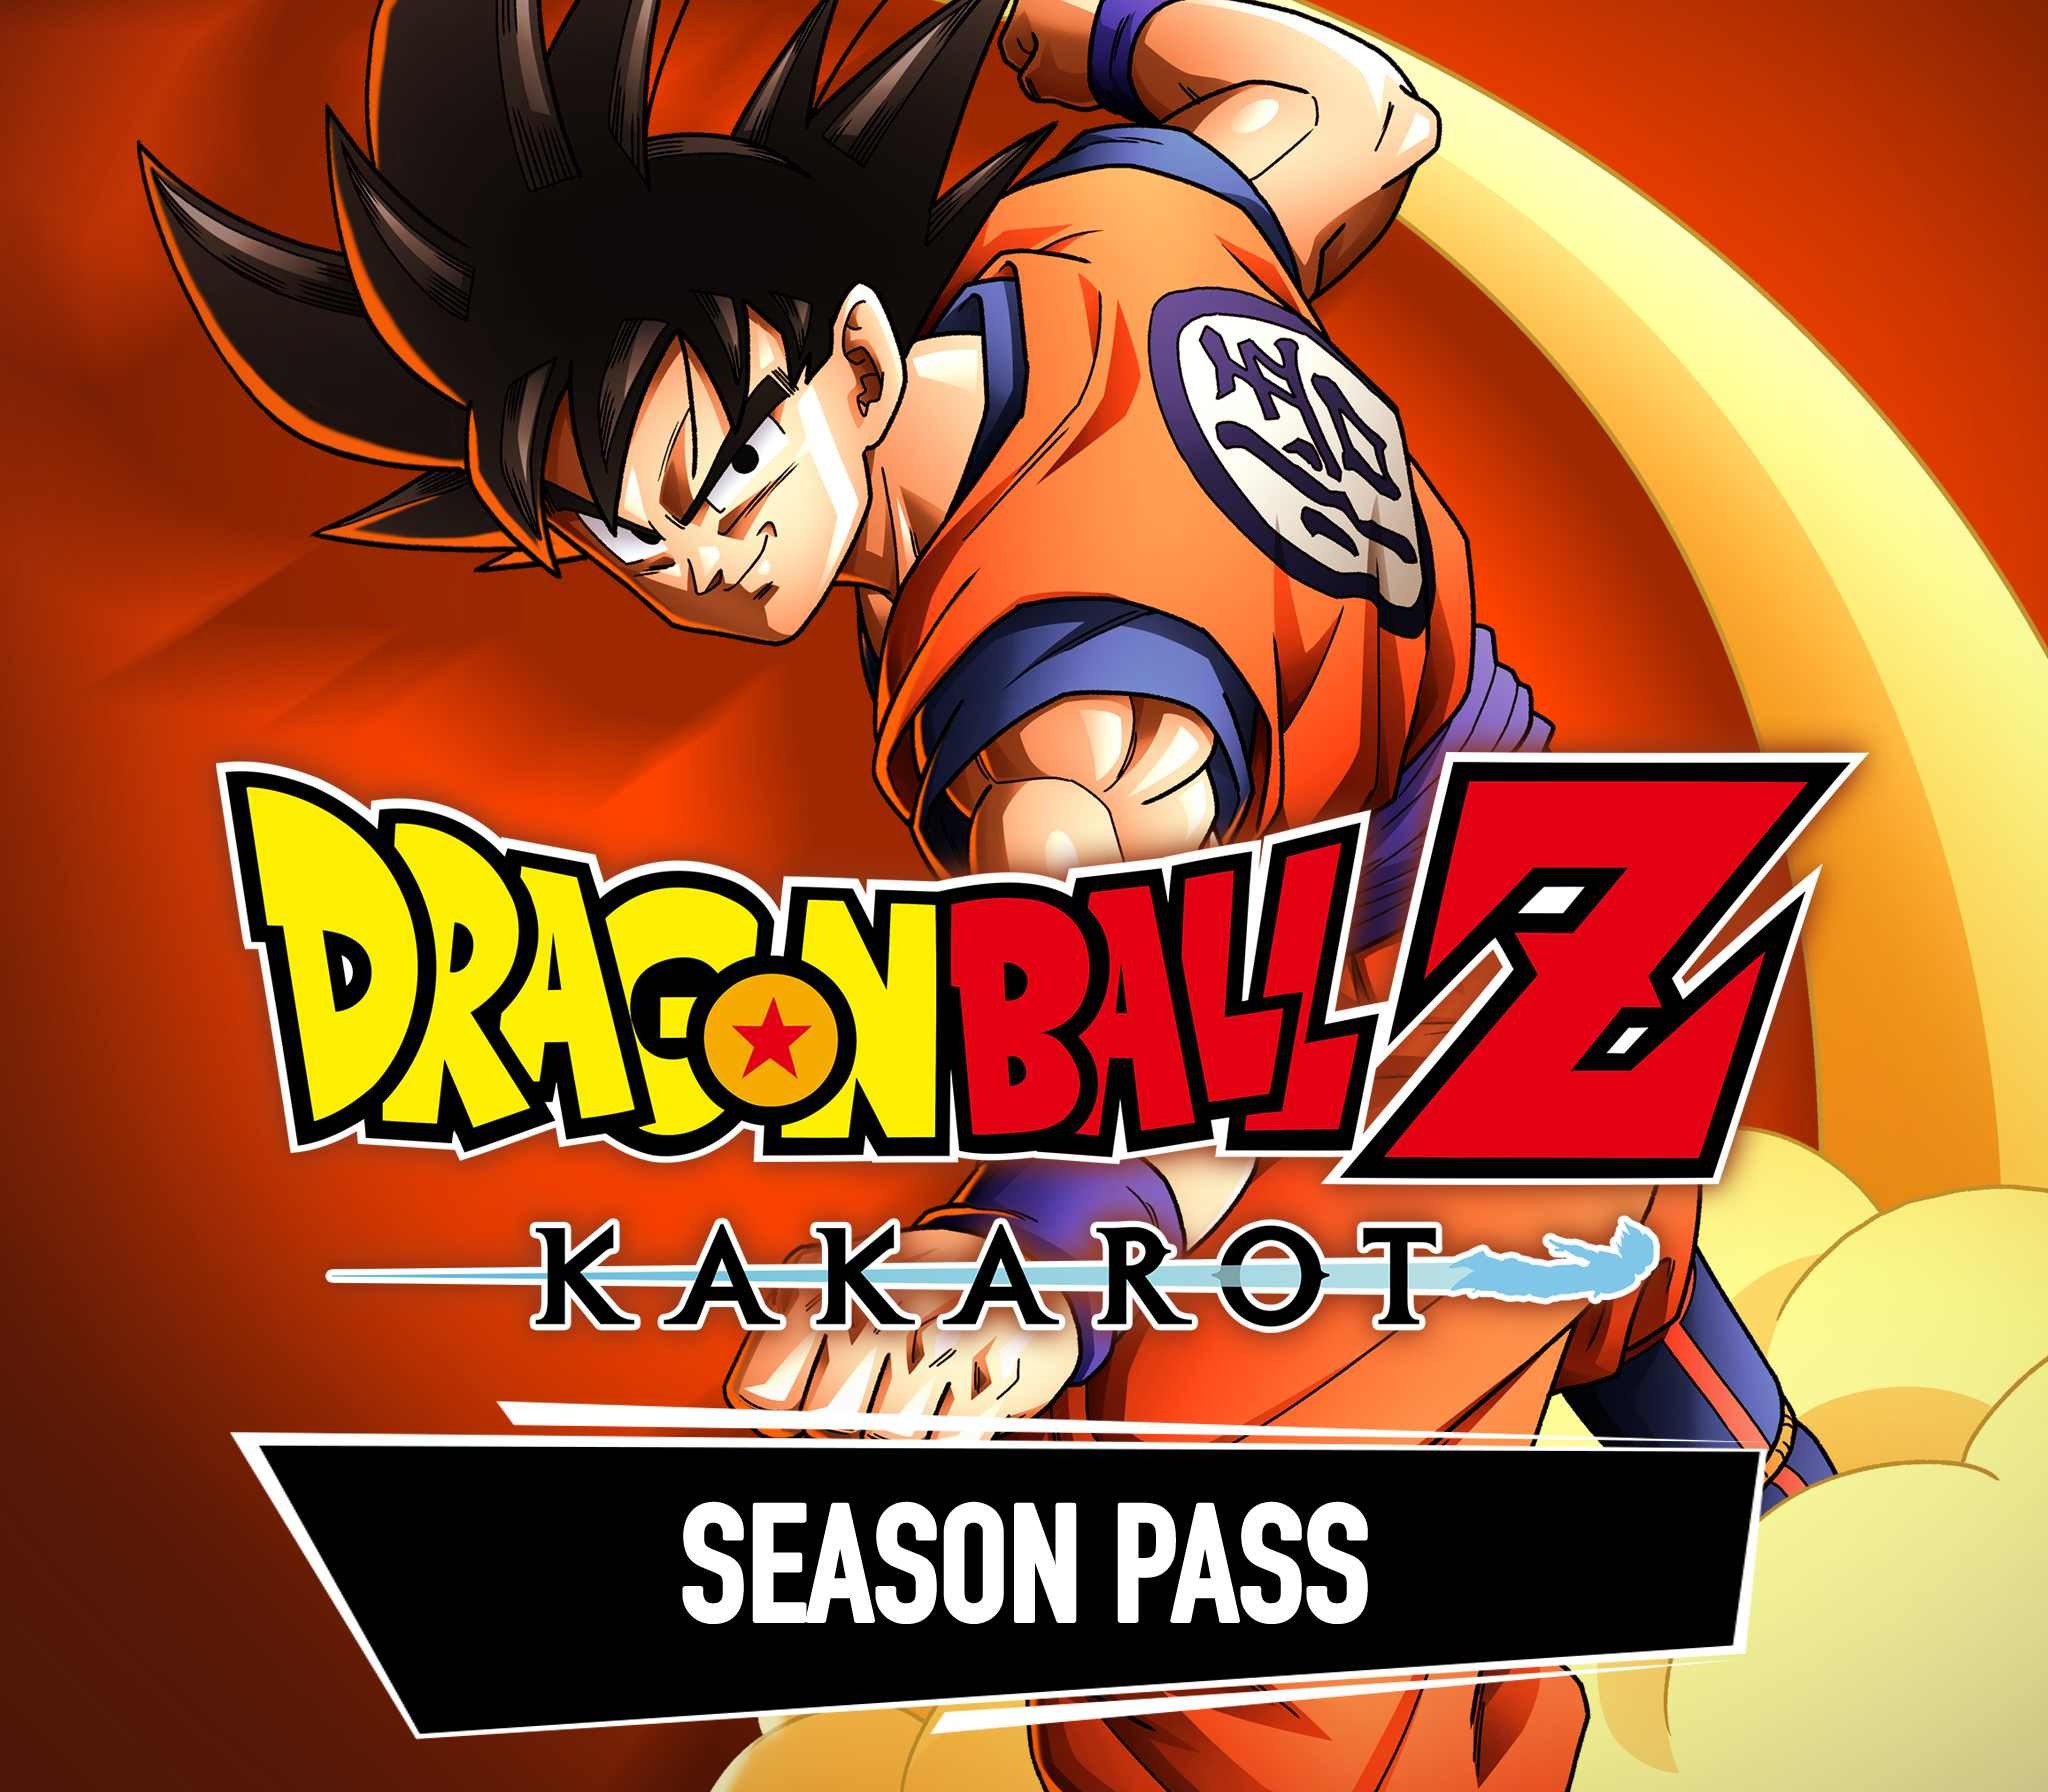 DRAGON BALL Z: KAKAROT Season Pass